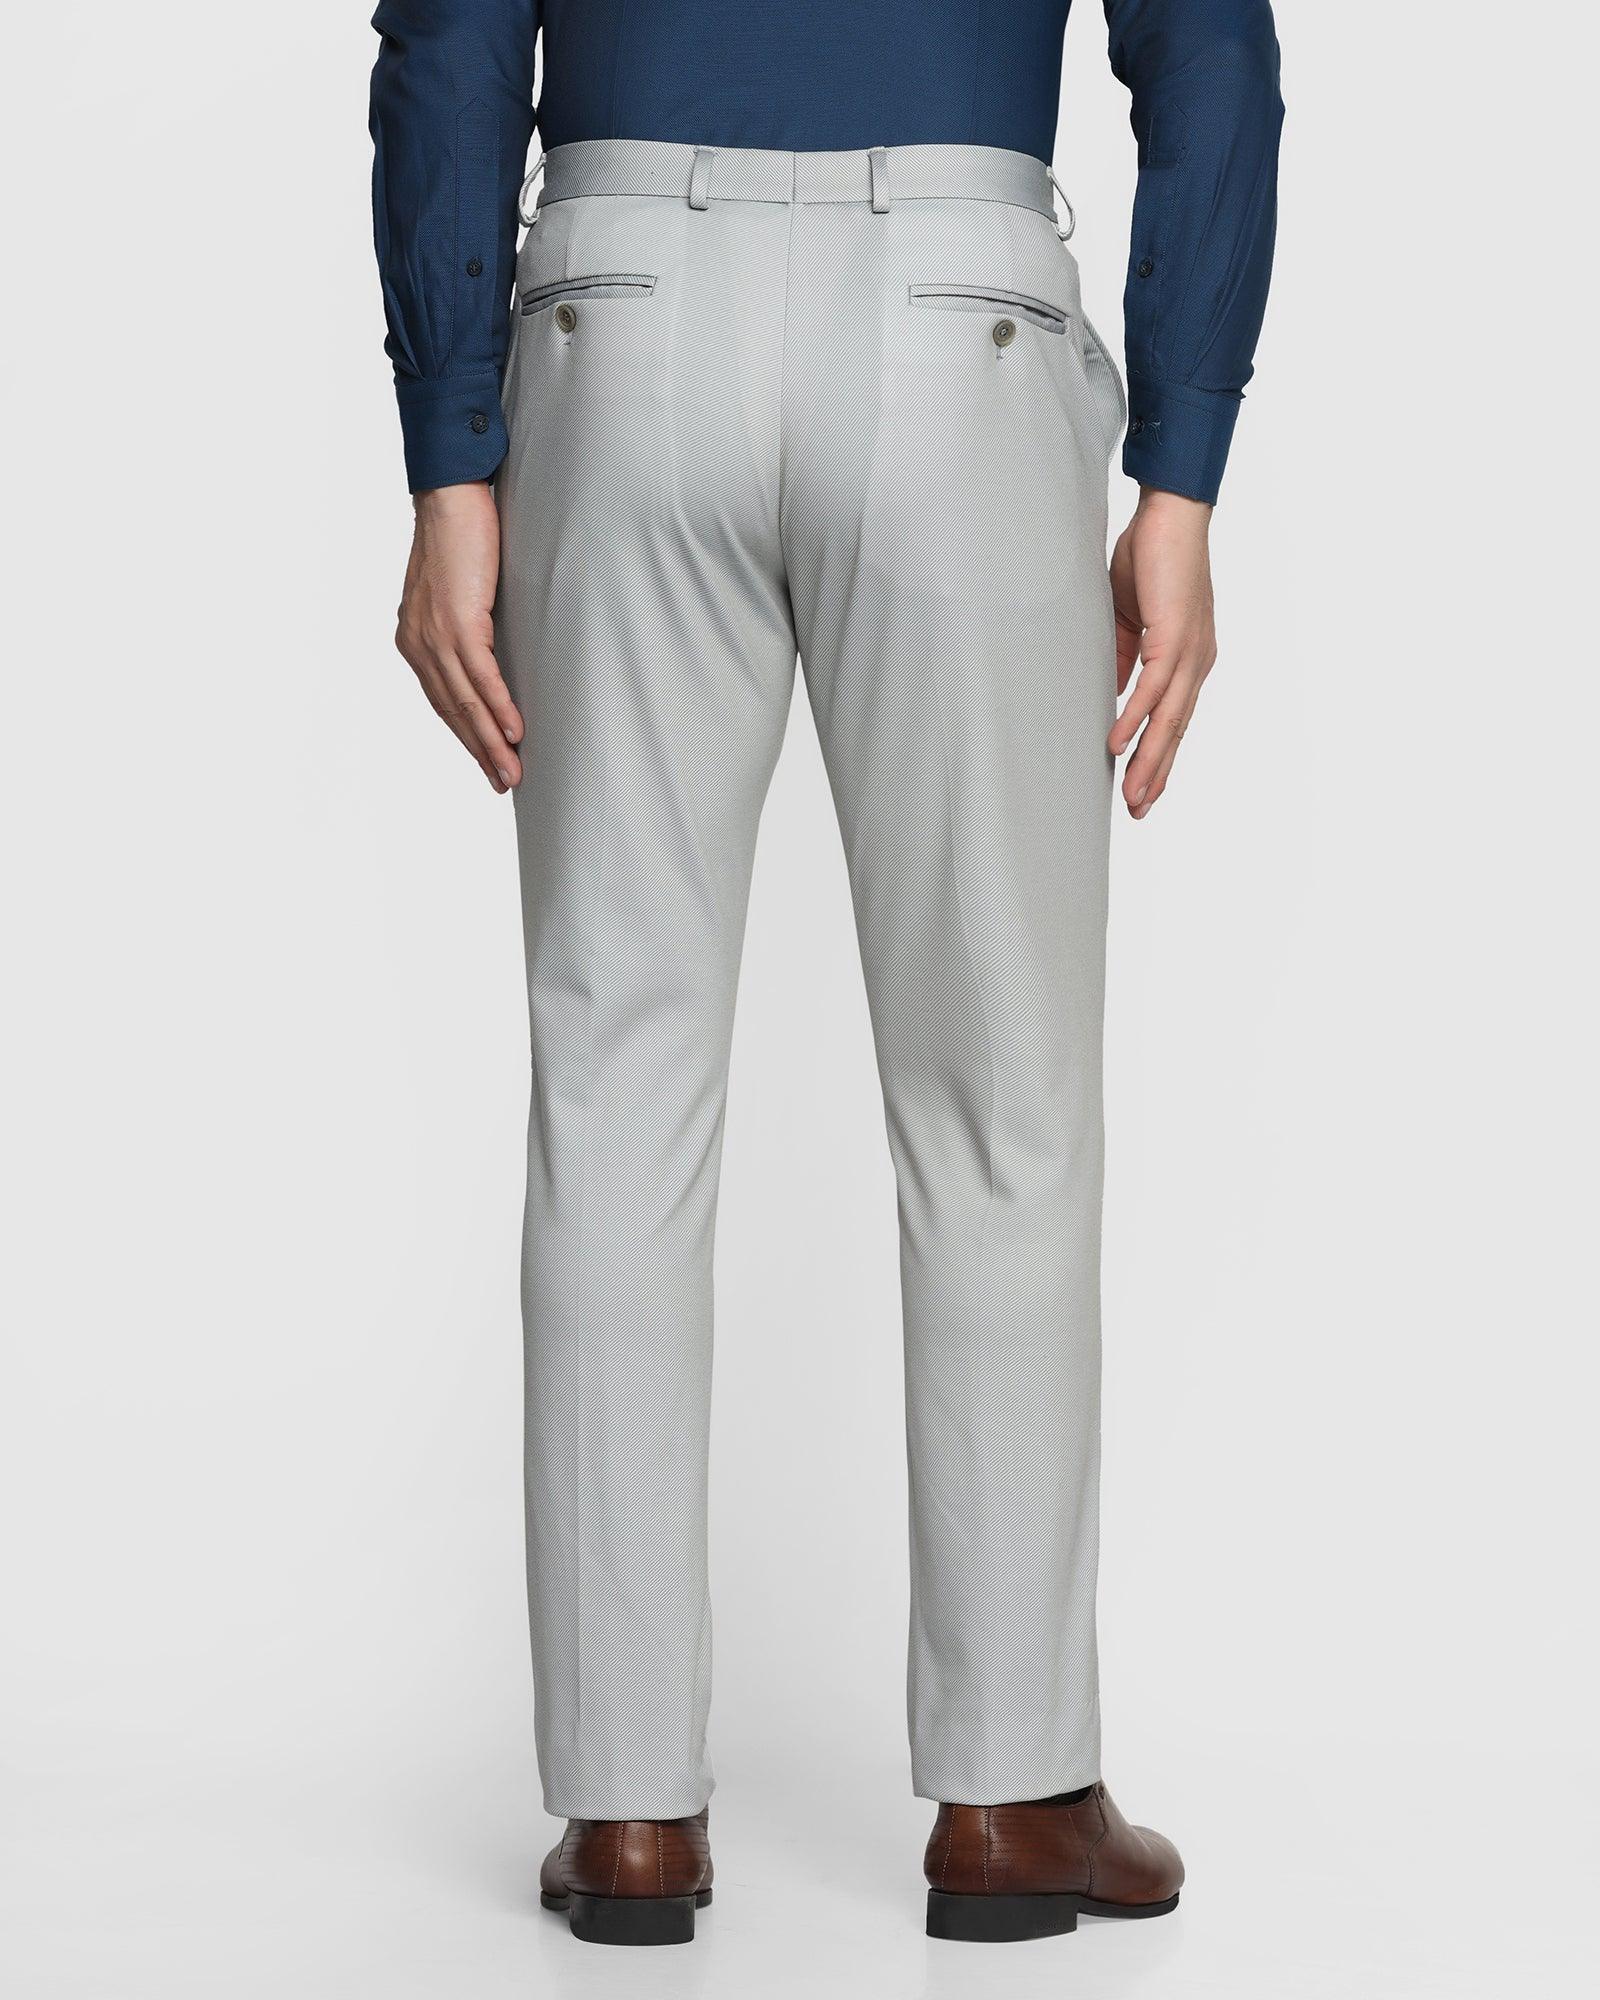 textured formal trousers in light grey b 91 street blackberrys clothing 2